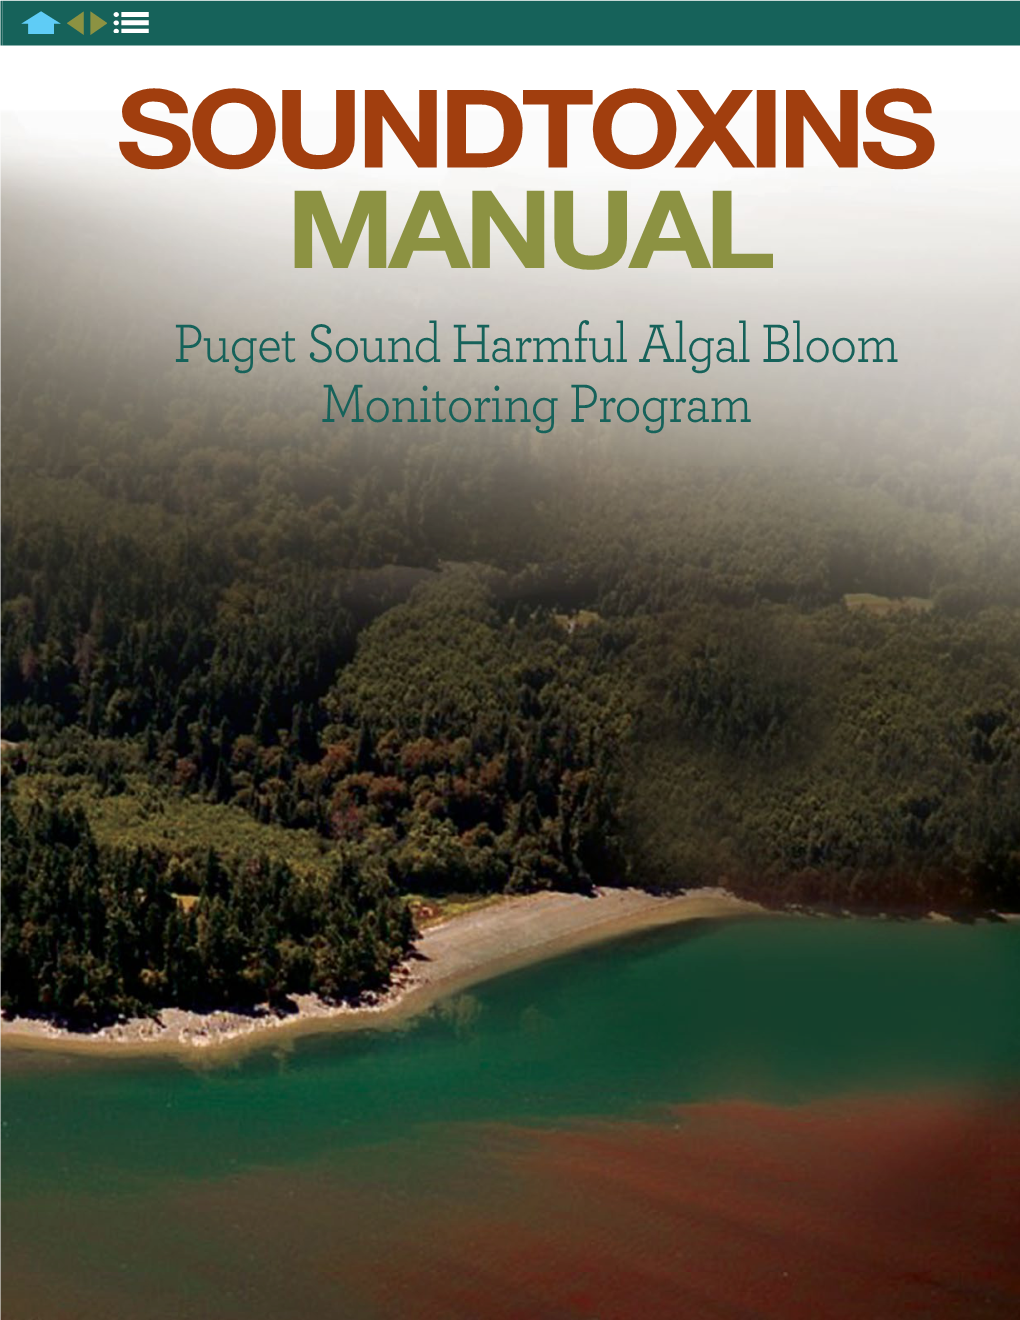 Soundtoxins Manual 2016